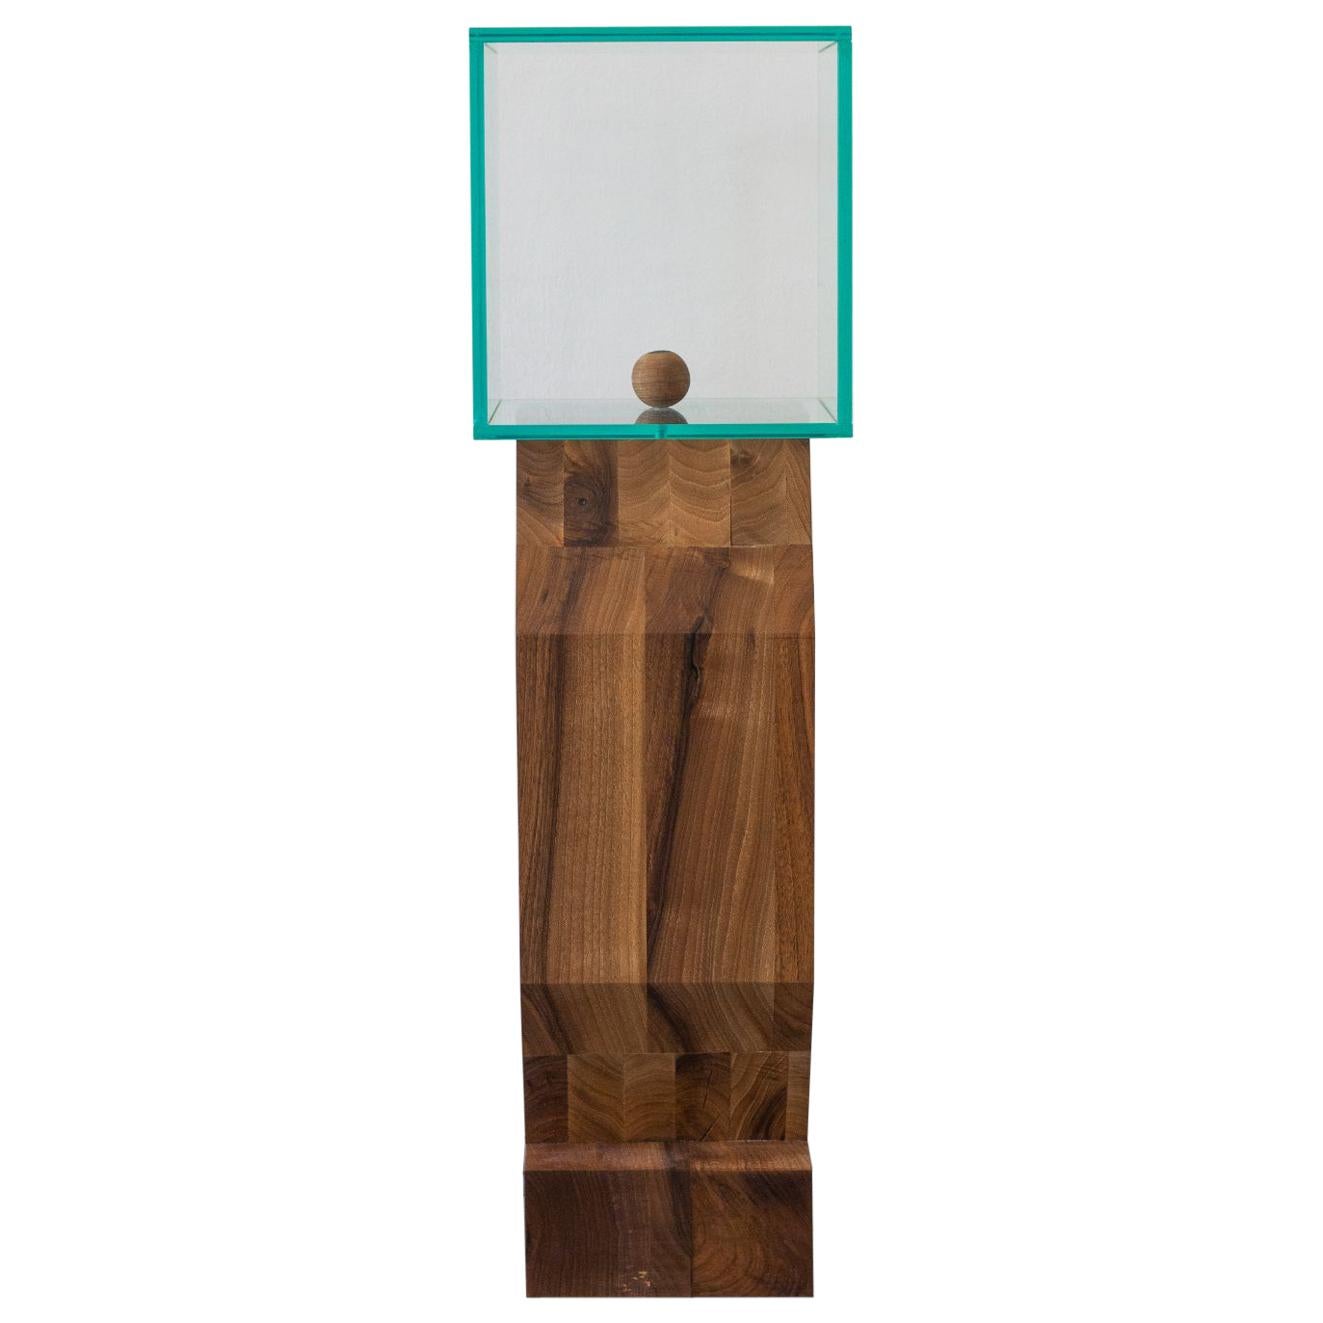 Wood Figure with Glass Head by Radu Abraham